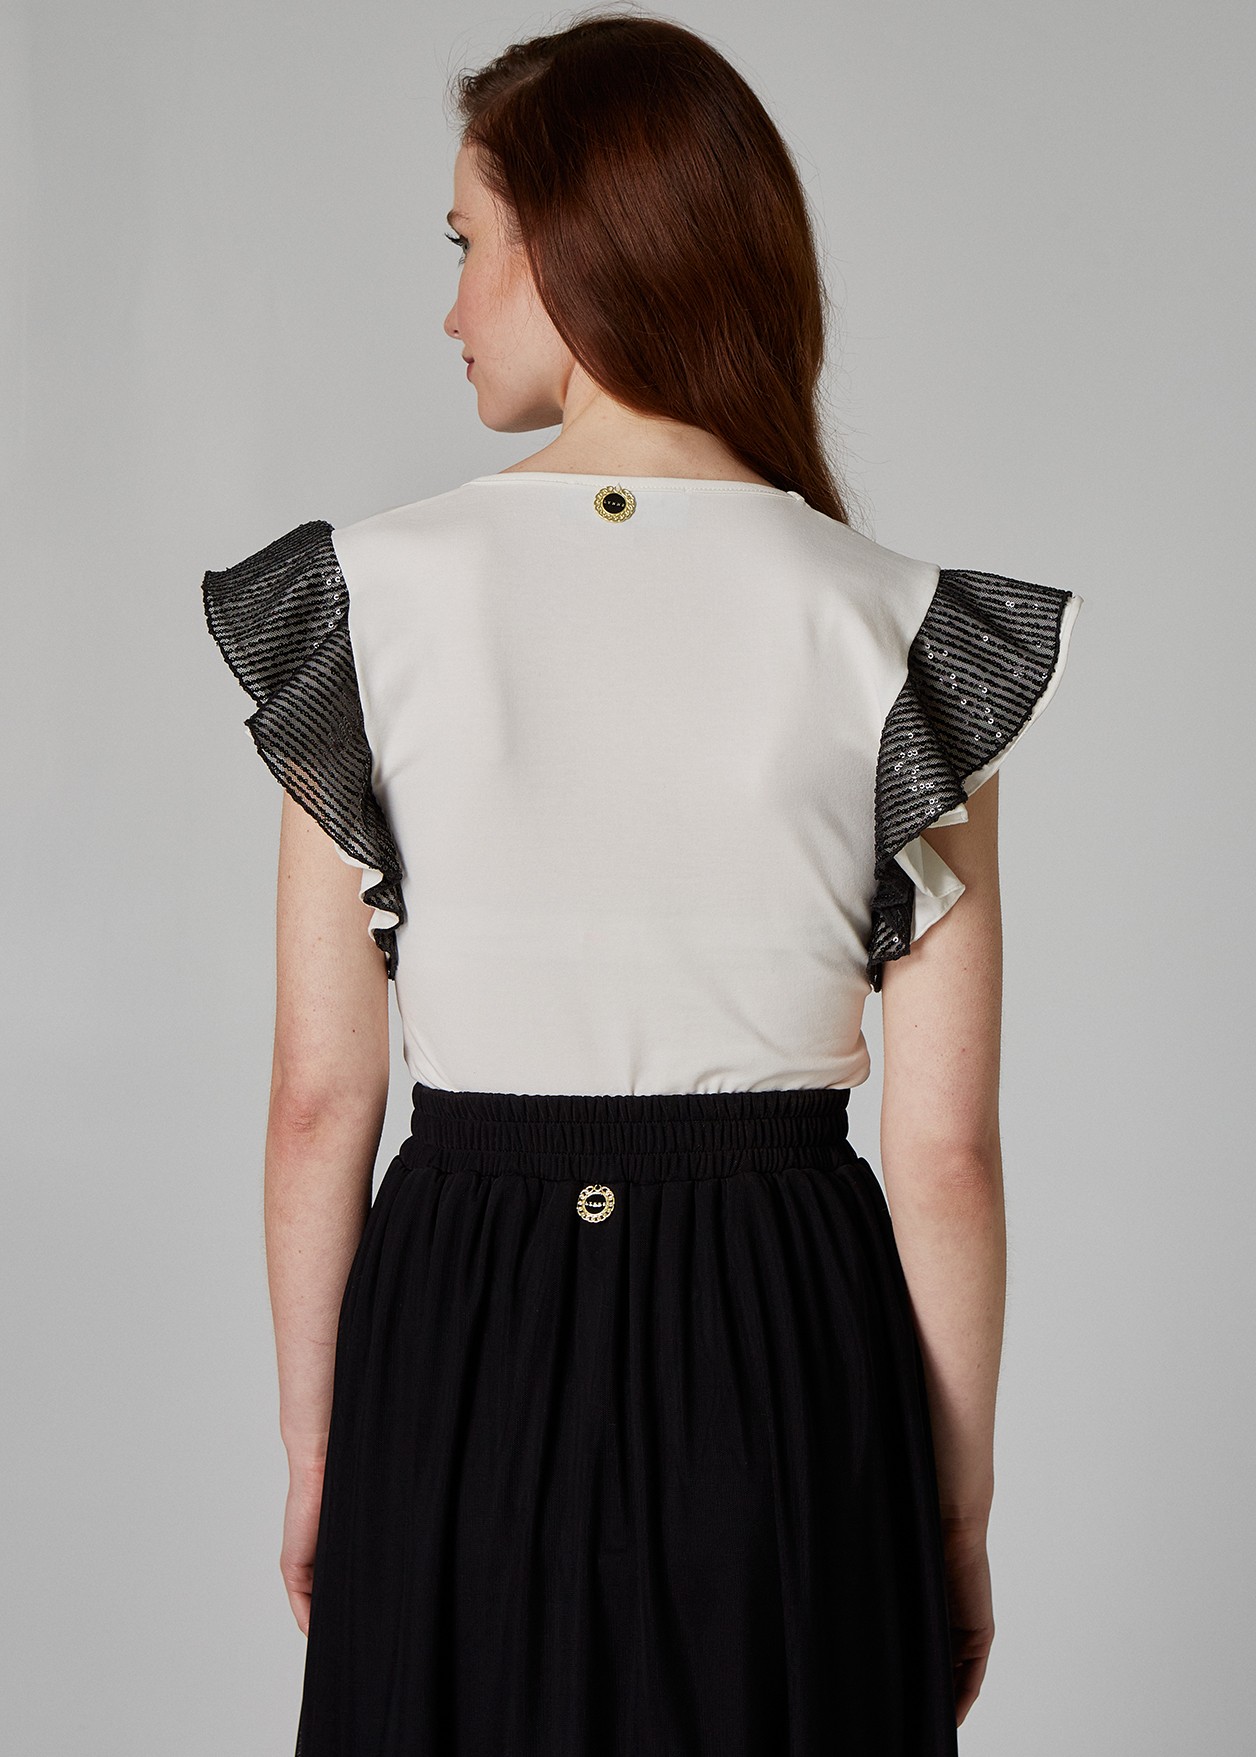 Shortsleeve blouse with print "LYNNE"